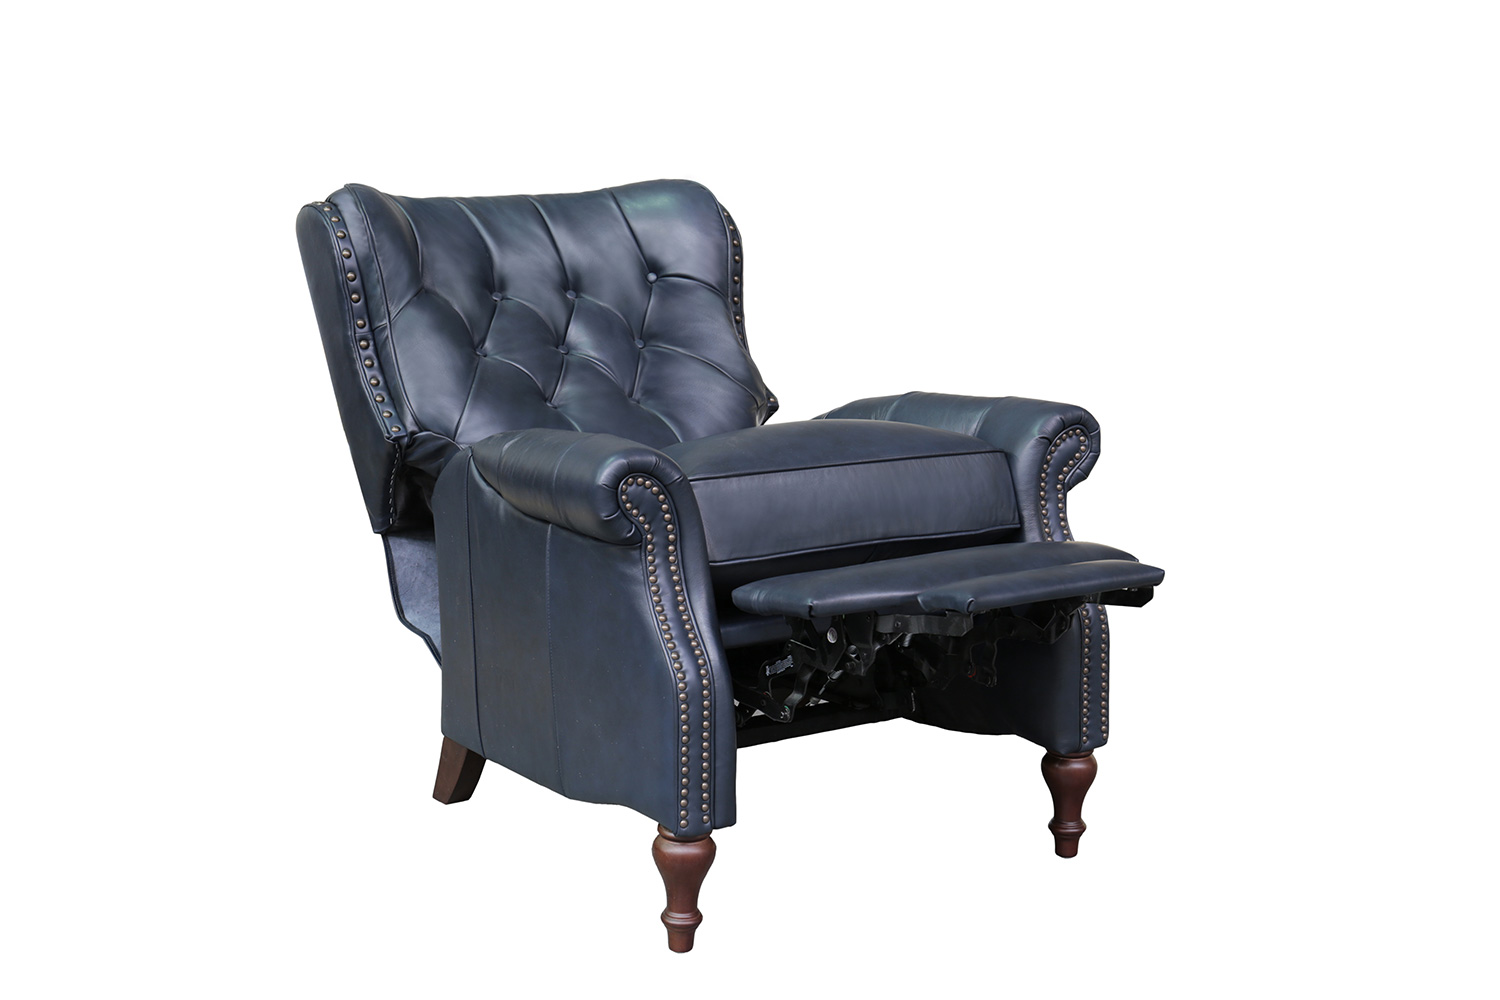 Barcalounger KendAll Recliner Chair - Shoreham Blue/All Leather